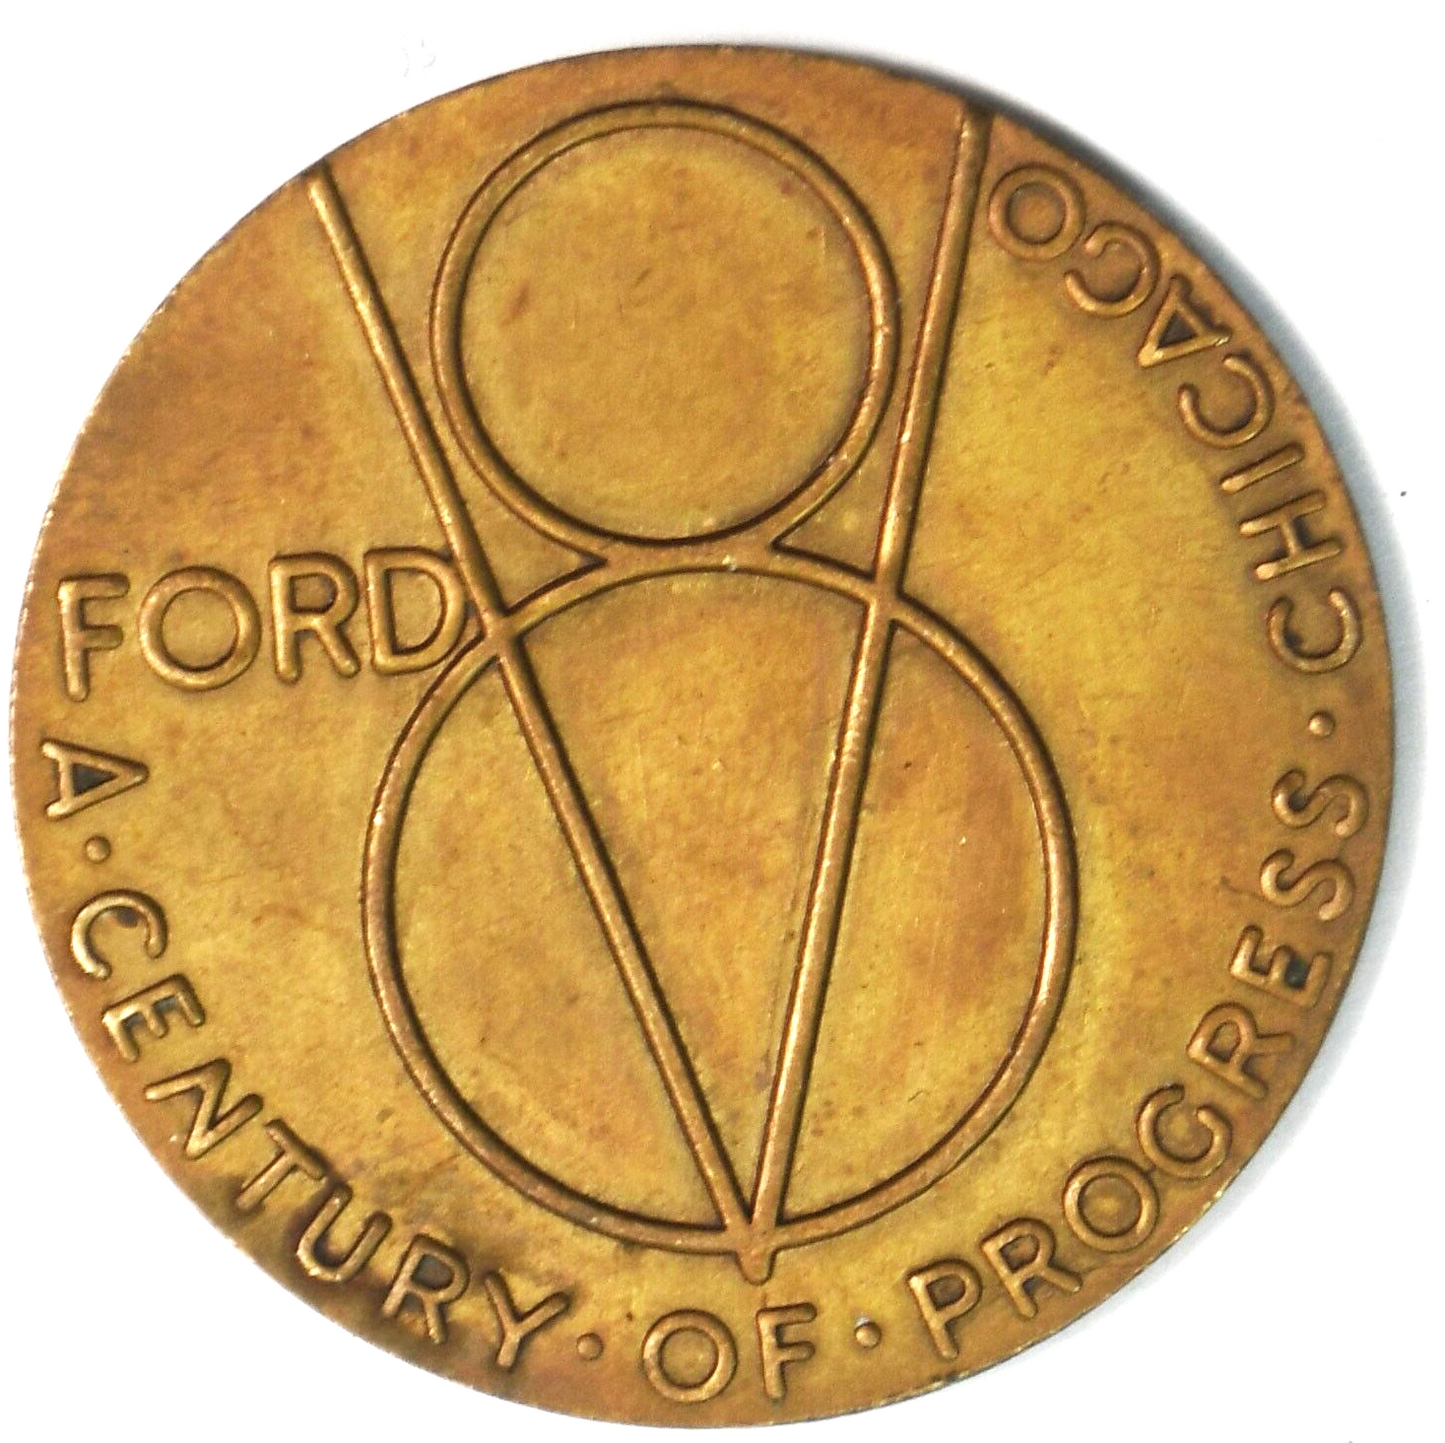 1934 Ford Exposition V8 A Century of Progress Chicago Medal 34mm Token